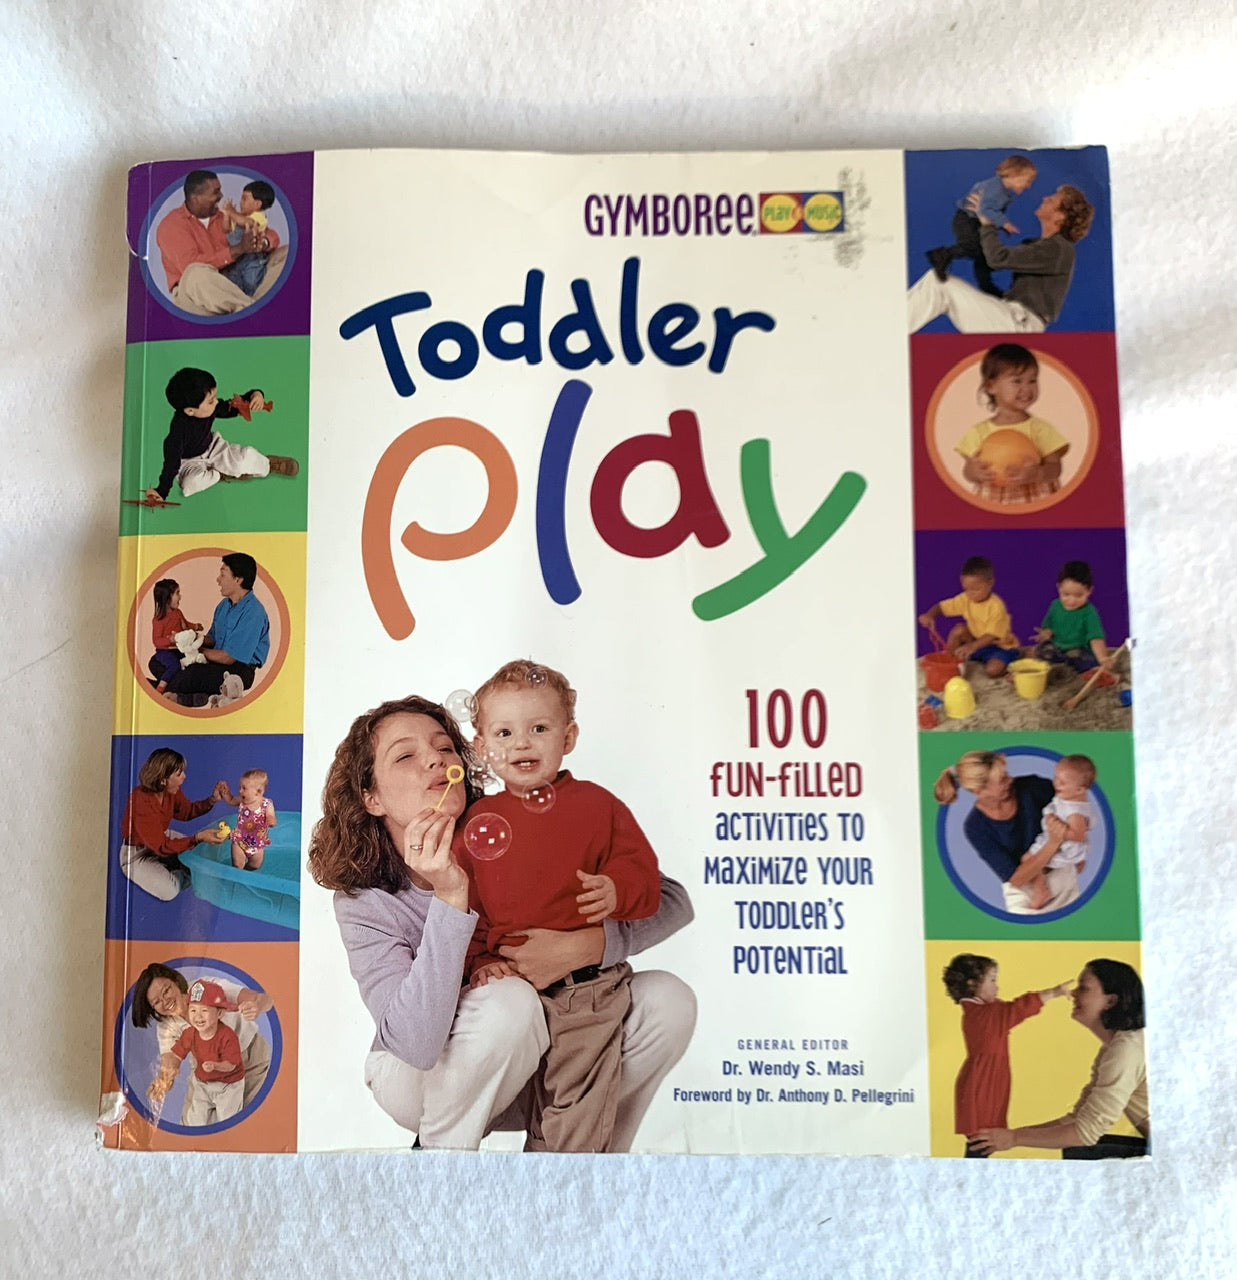 Book - Gymboree Toddler Play